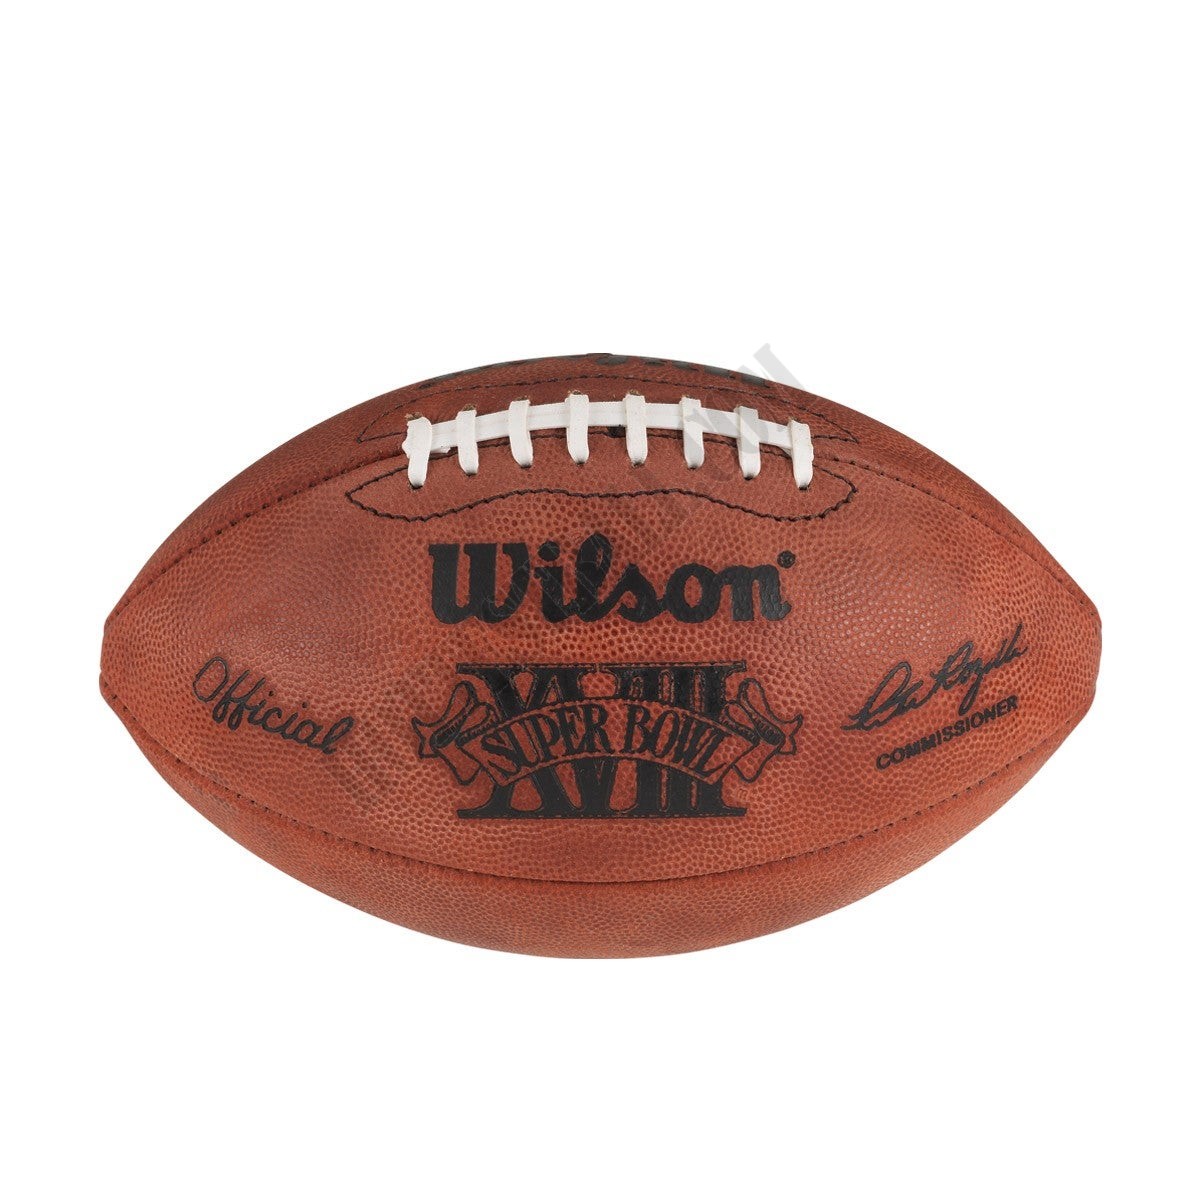 Super Bowl XVIII Game Football - Los Angeles Raiders ● Wilson Promotions - Super Bowl XVIII Game Football - Los Angeles Raiders ● Wilson Promotions